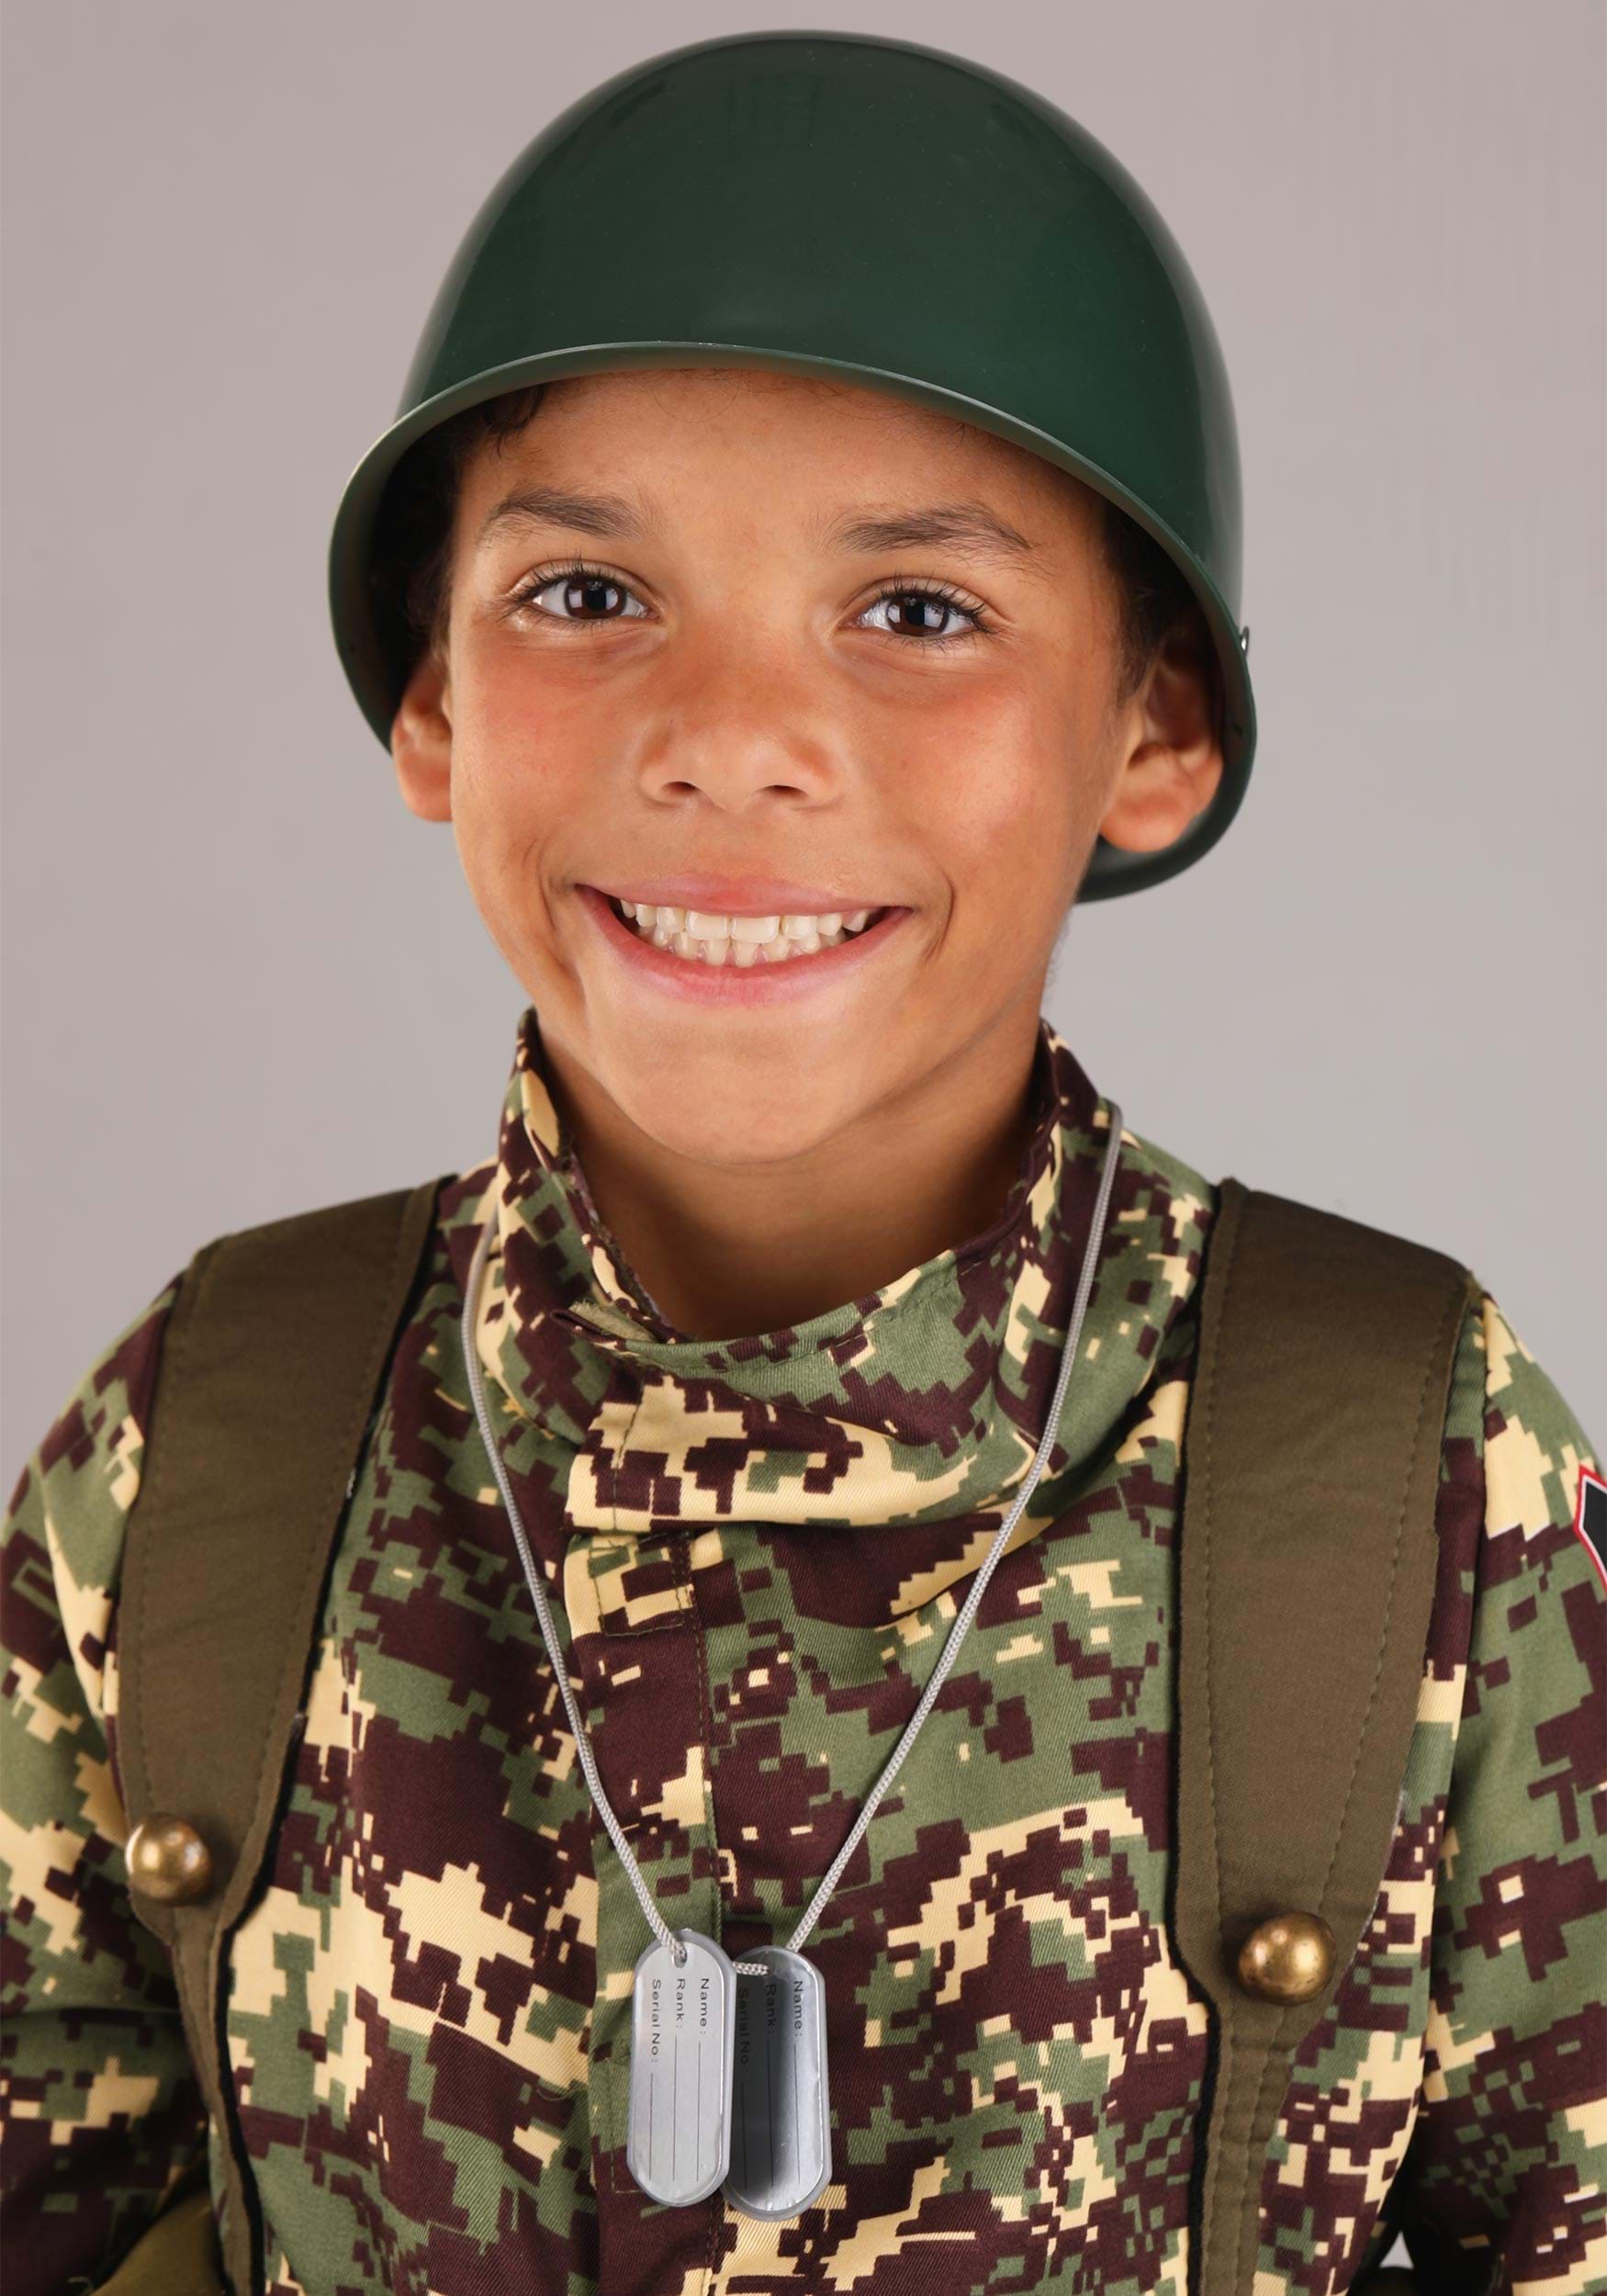 Soldier Prestige Kid's Costume